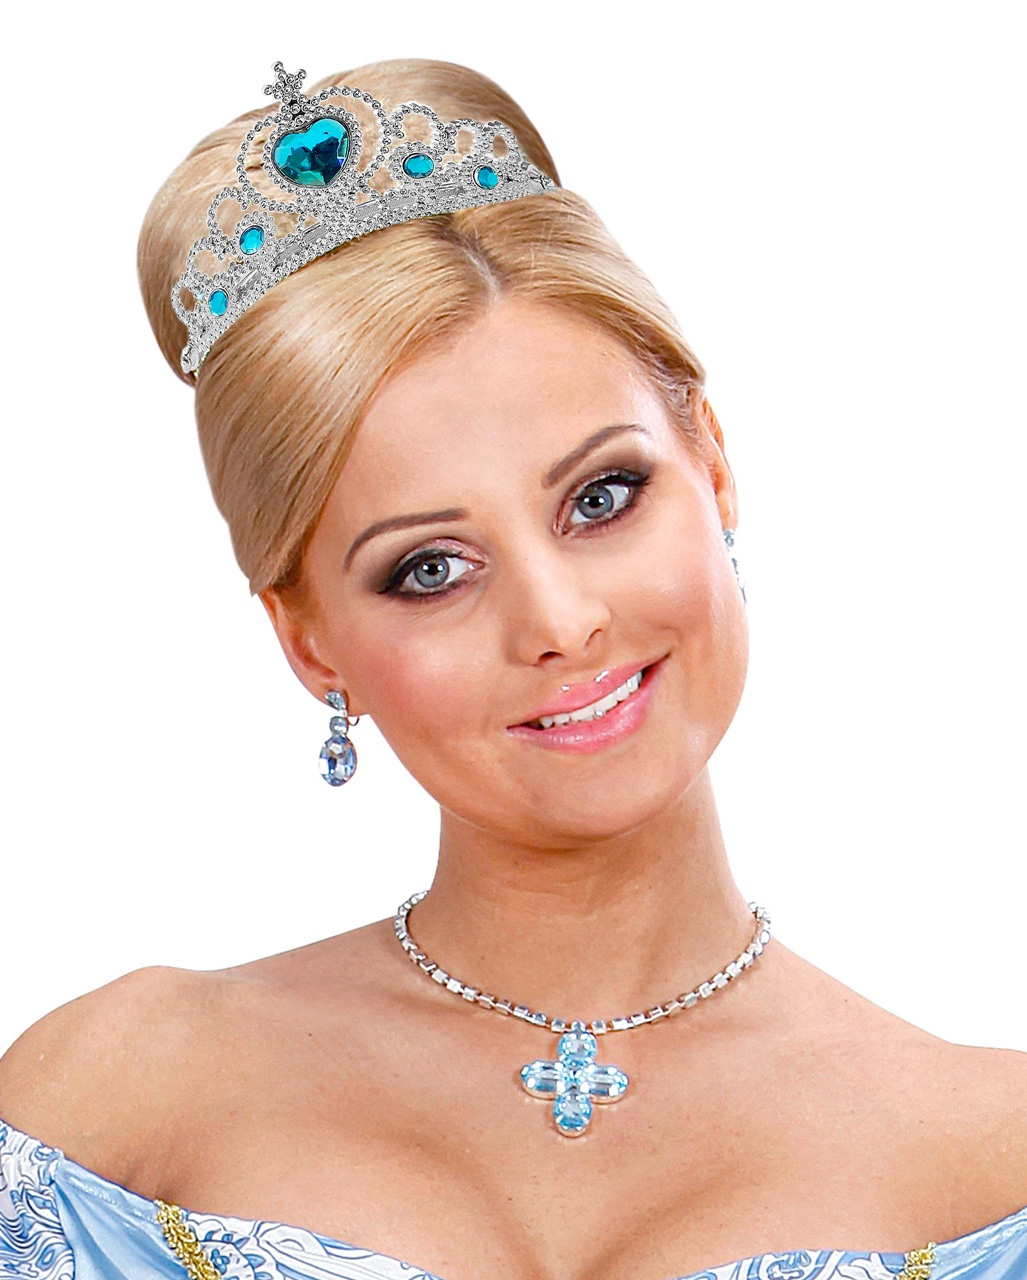 Silver Princess Tiara With Turquoise Stones Horror